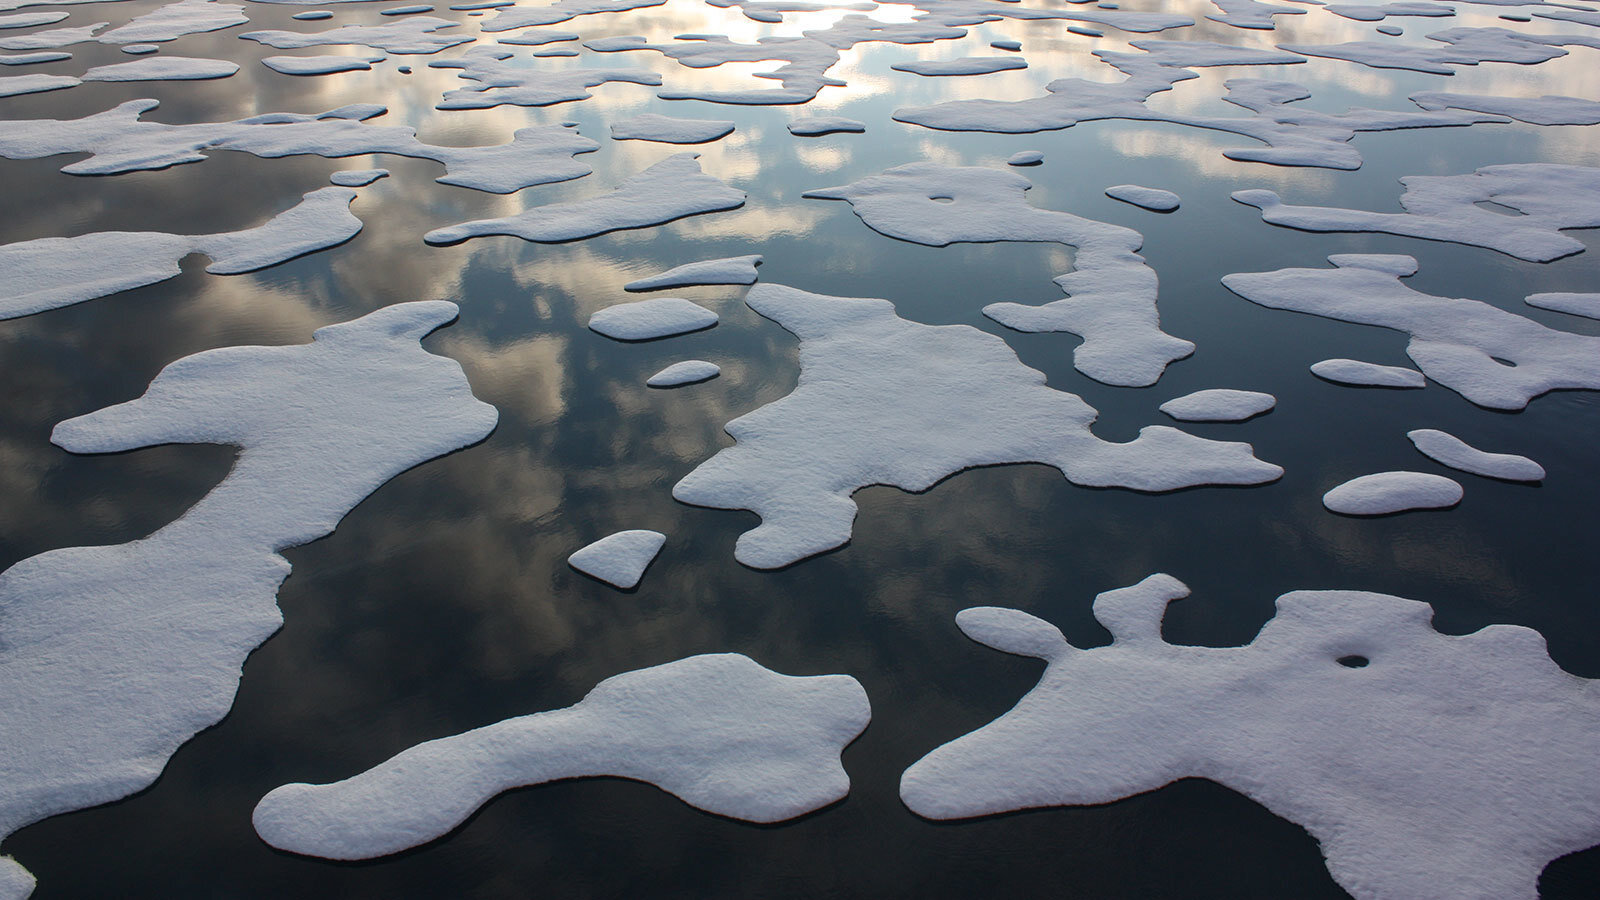 Contact, Access  Japan Consortium for Arctic Environmental Research